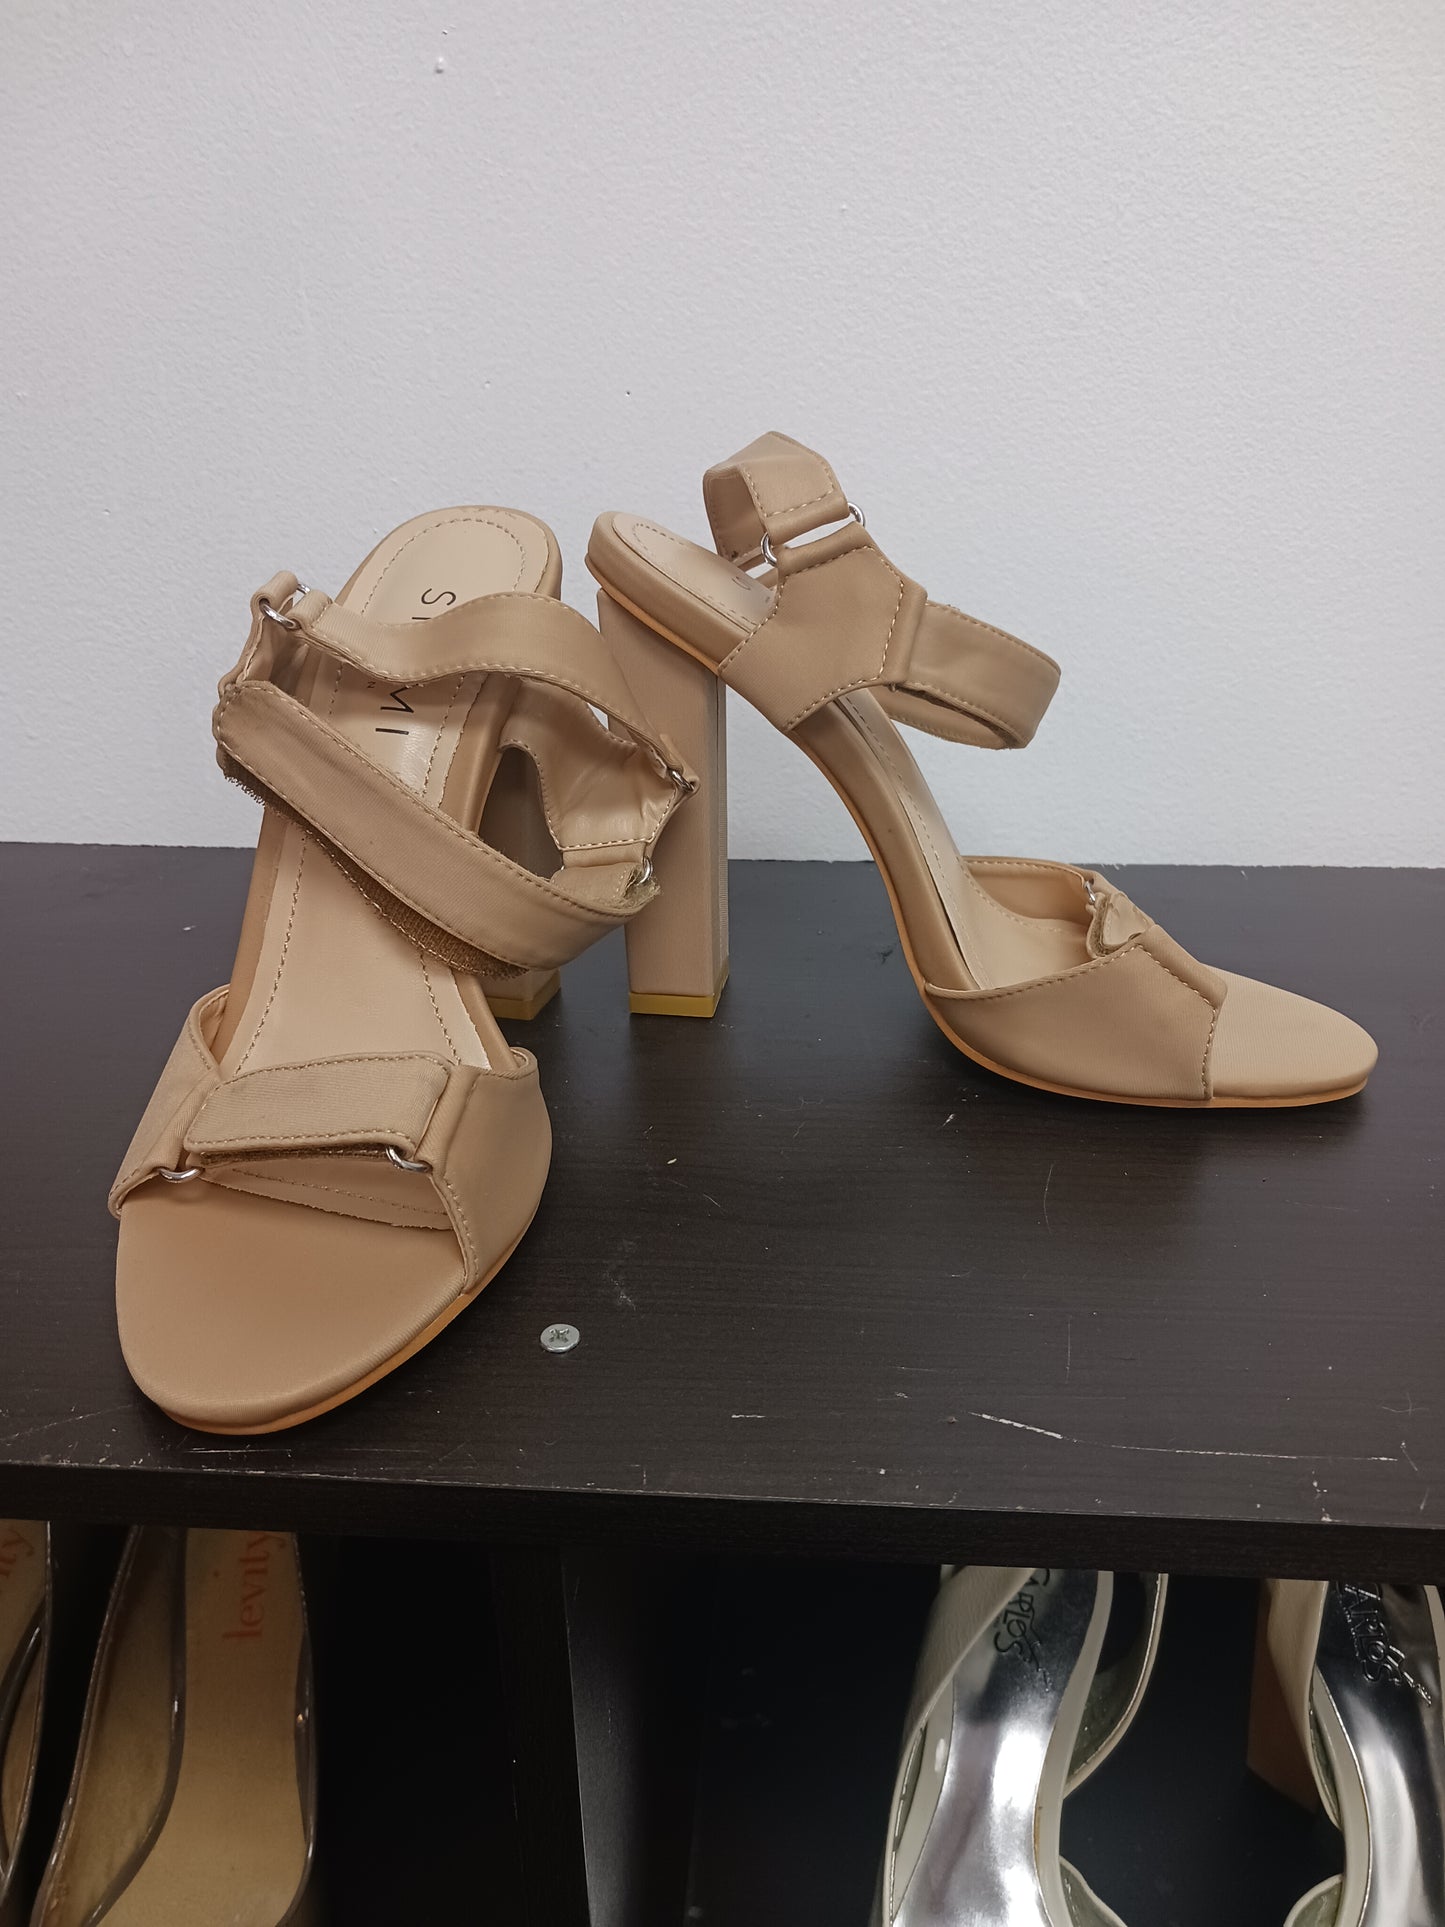 Simmi London Nude Beige Sandals Heels Shoes, Size US 5